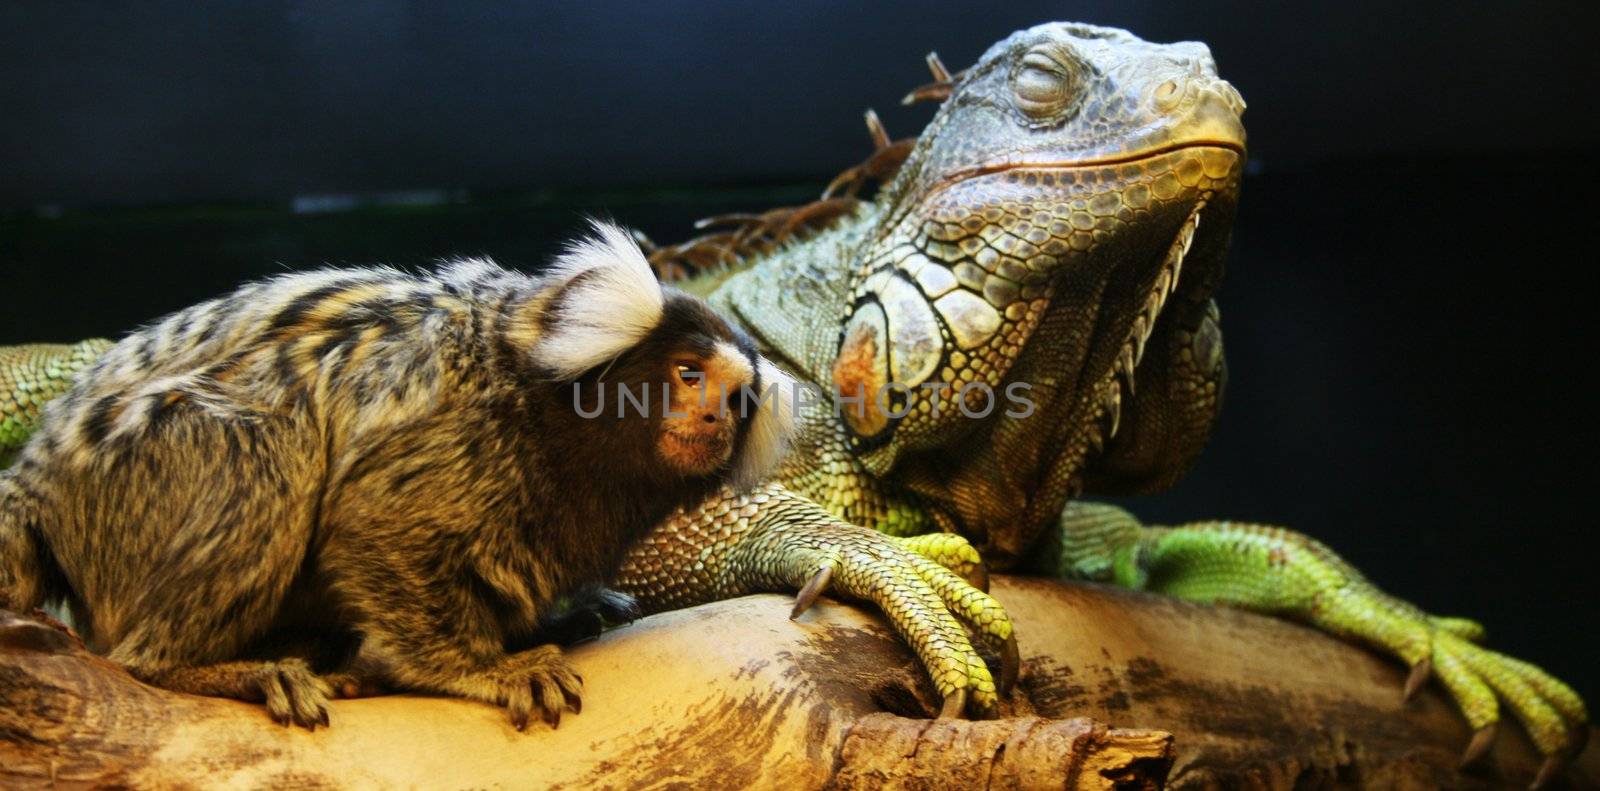 Iguana and monkey by Eirik2301